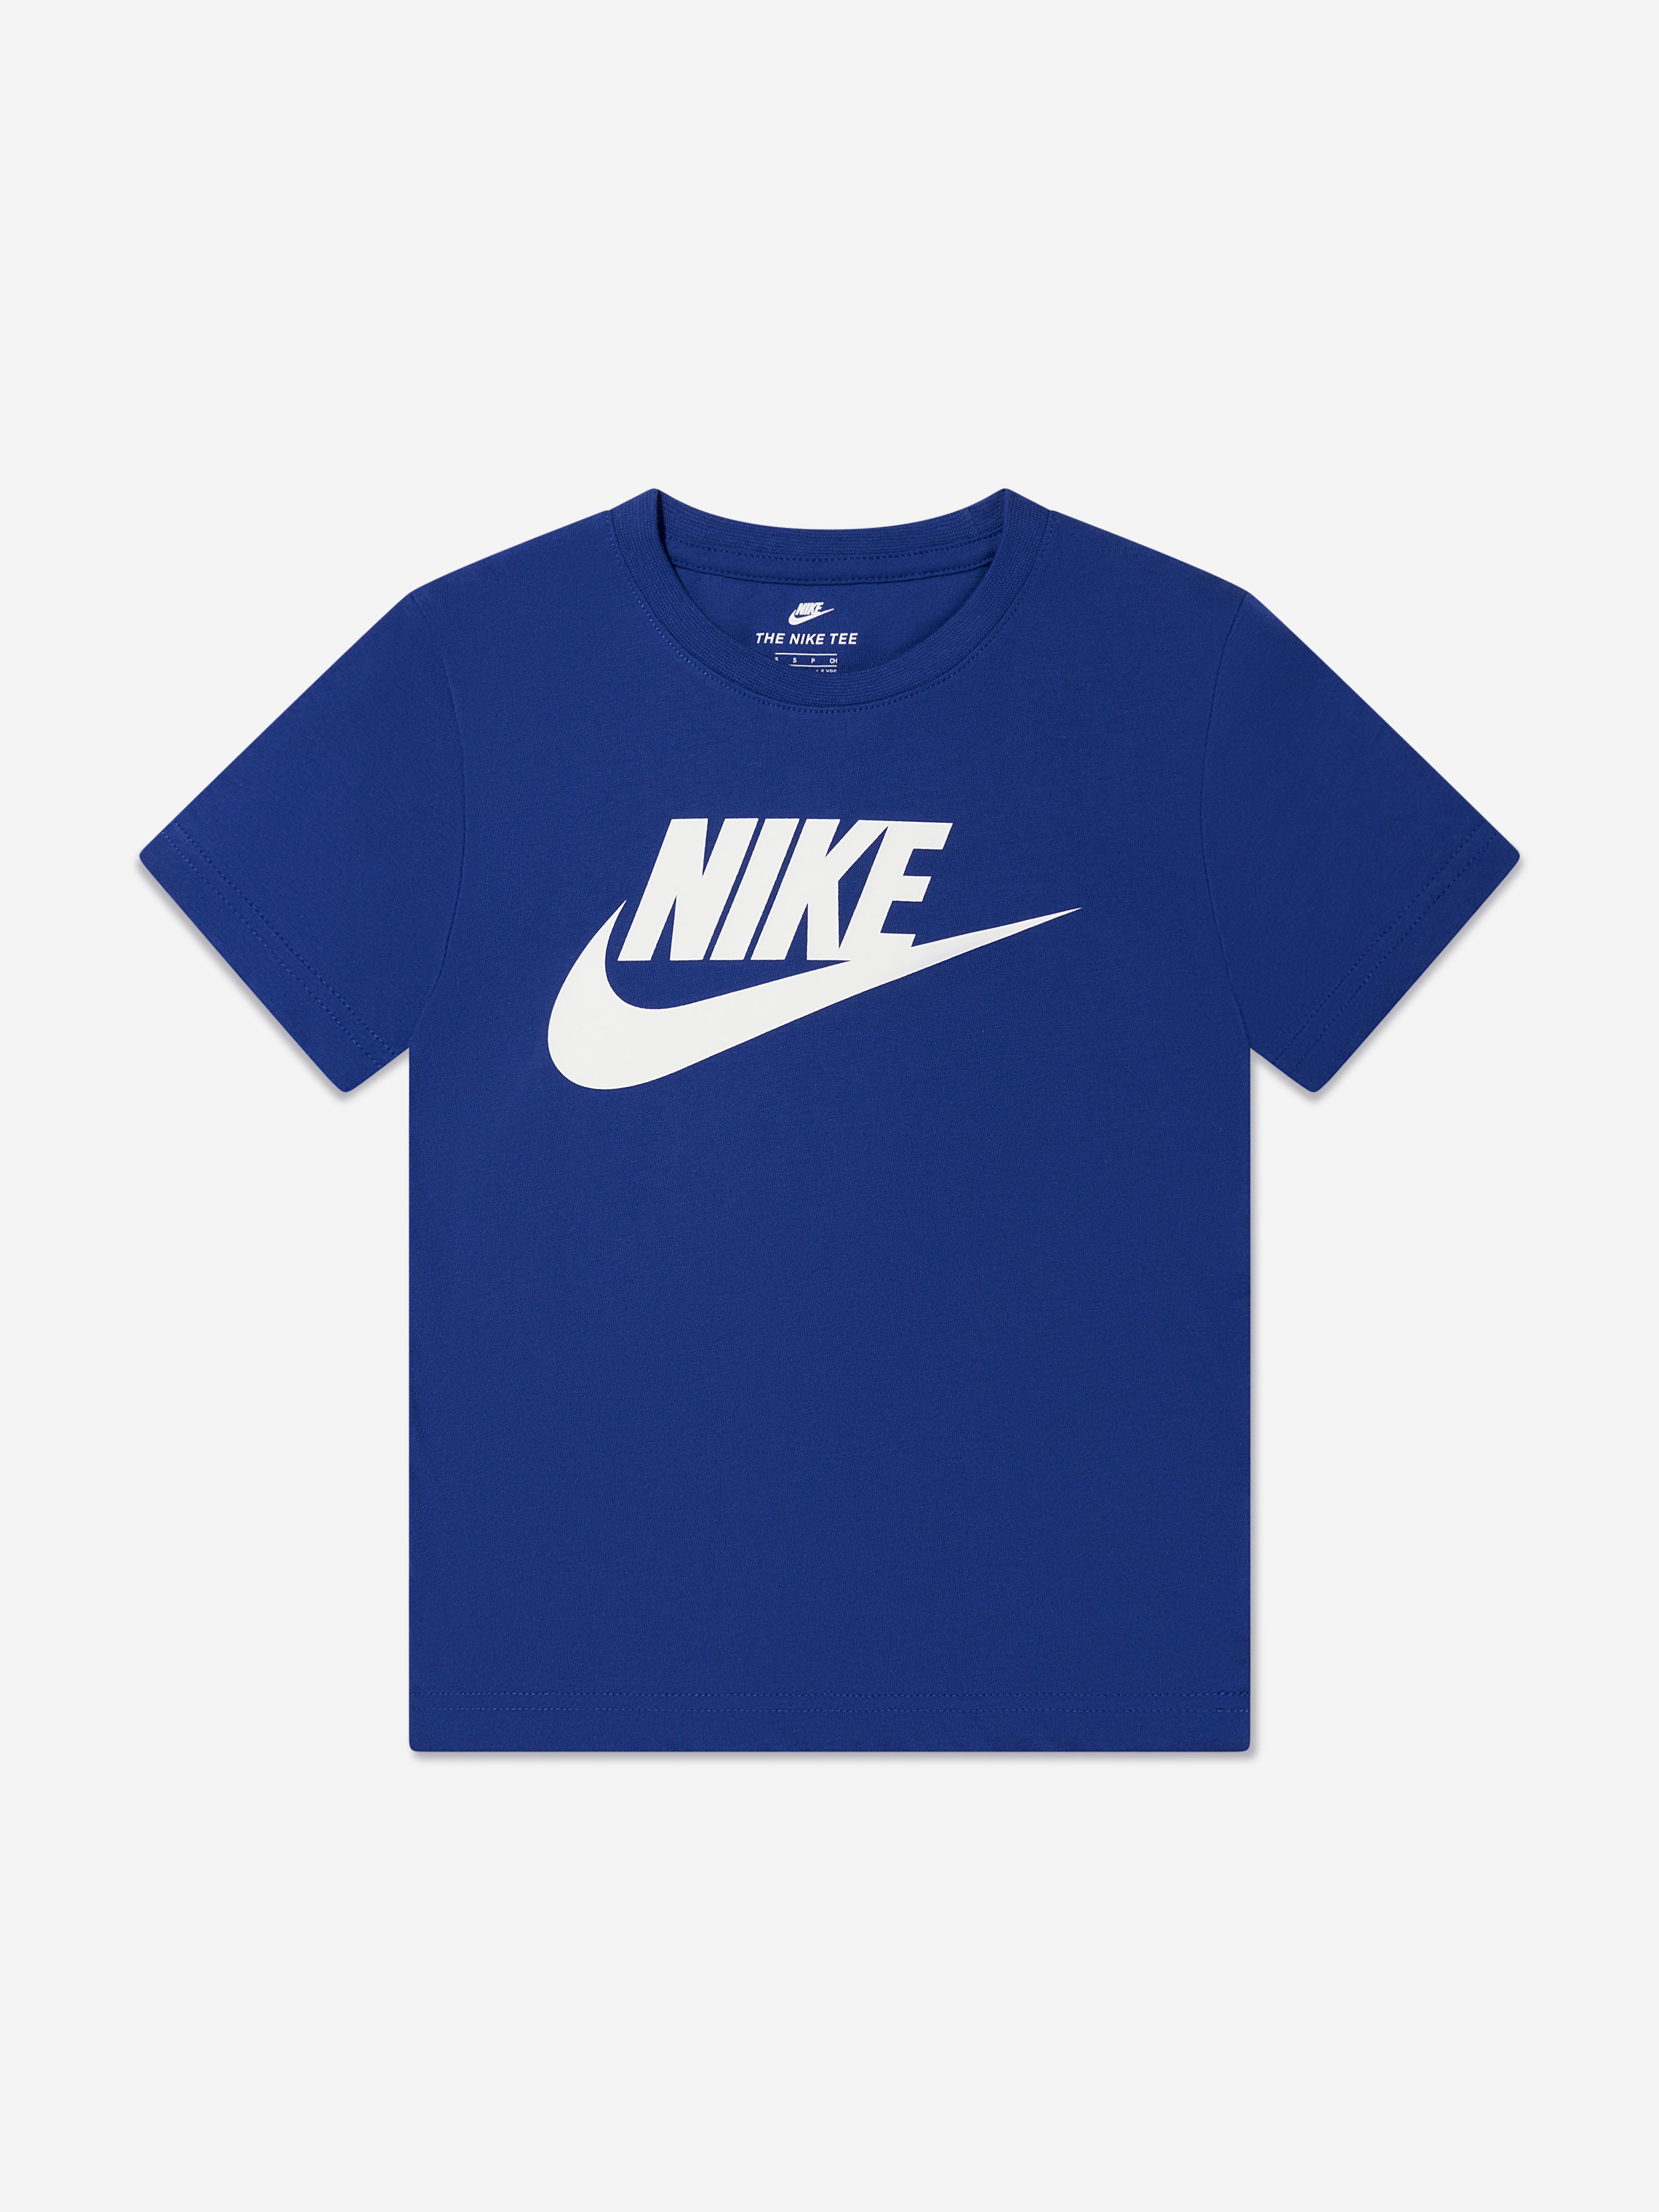 Nike Boys Cotton Jersey Logo Childsplay T-Shirt Clothing 